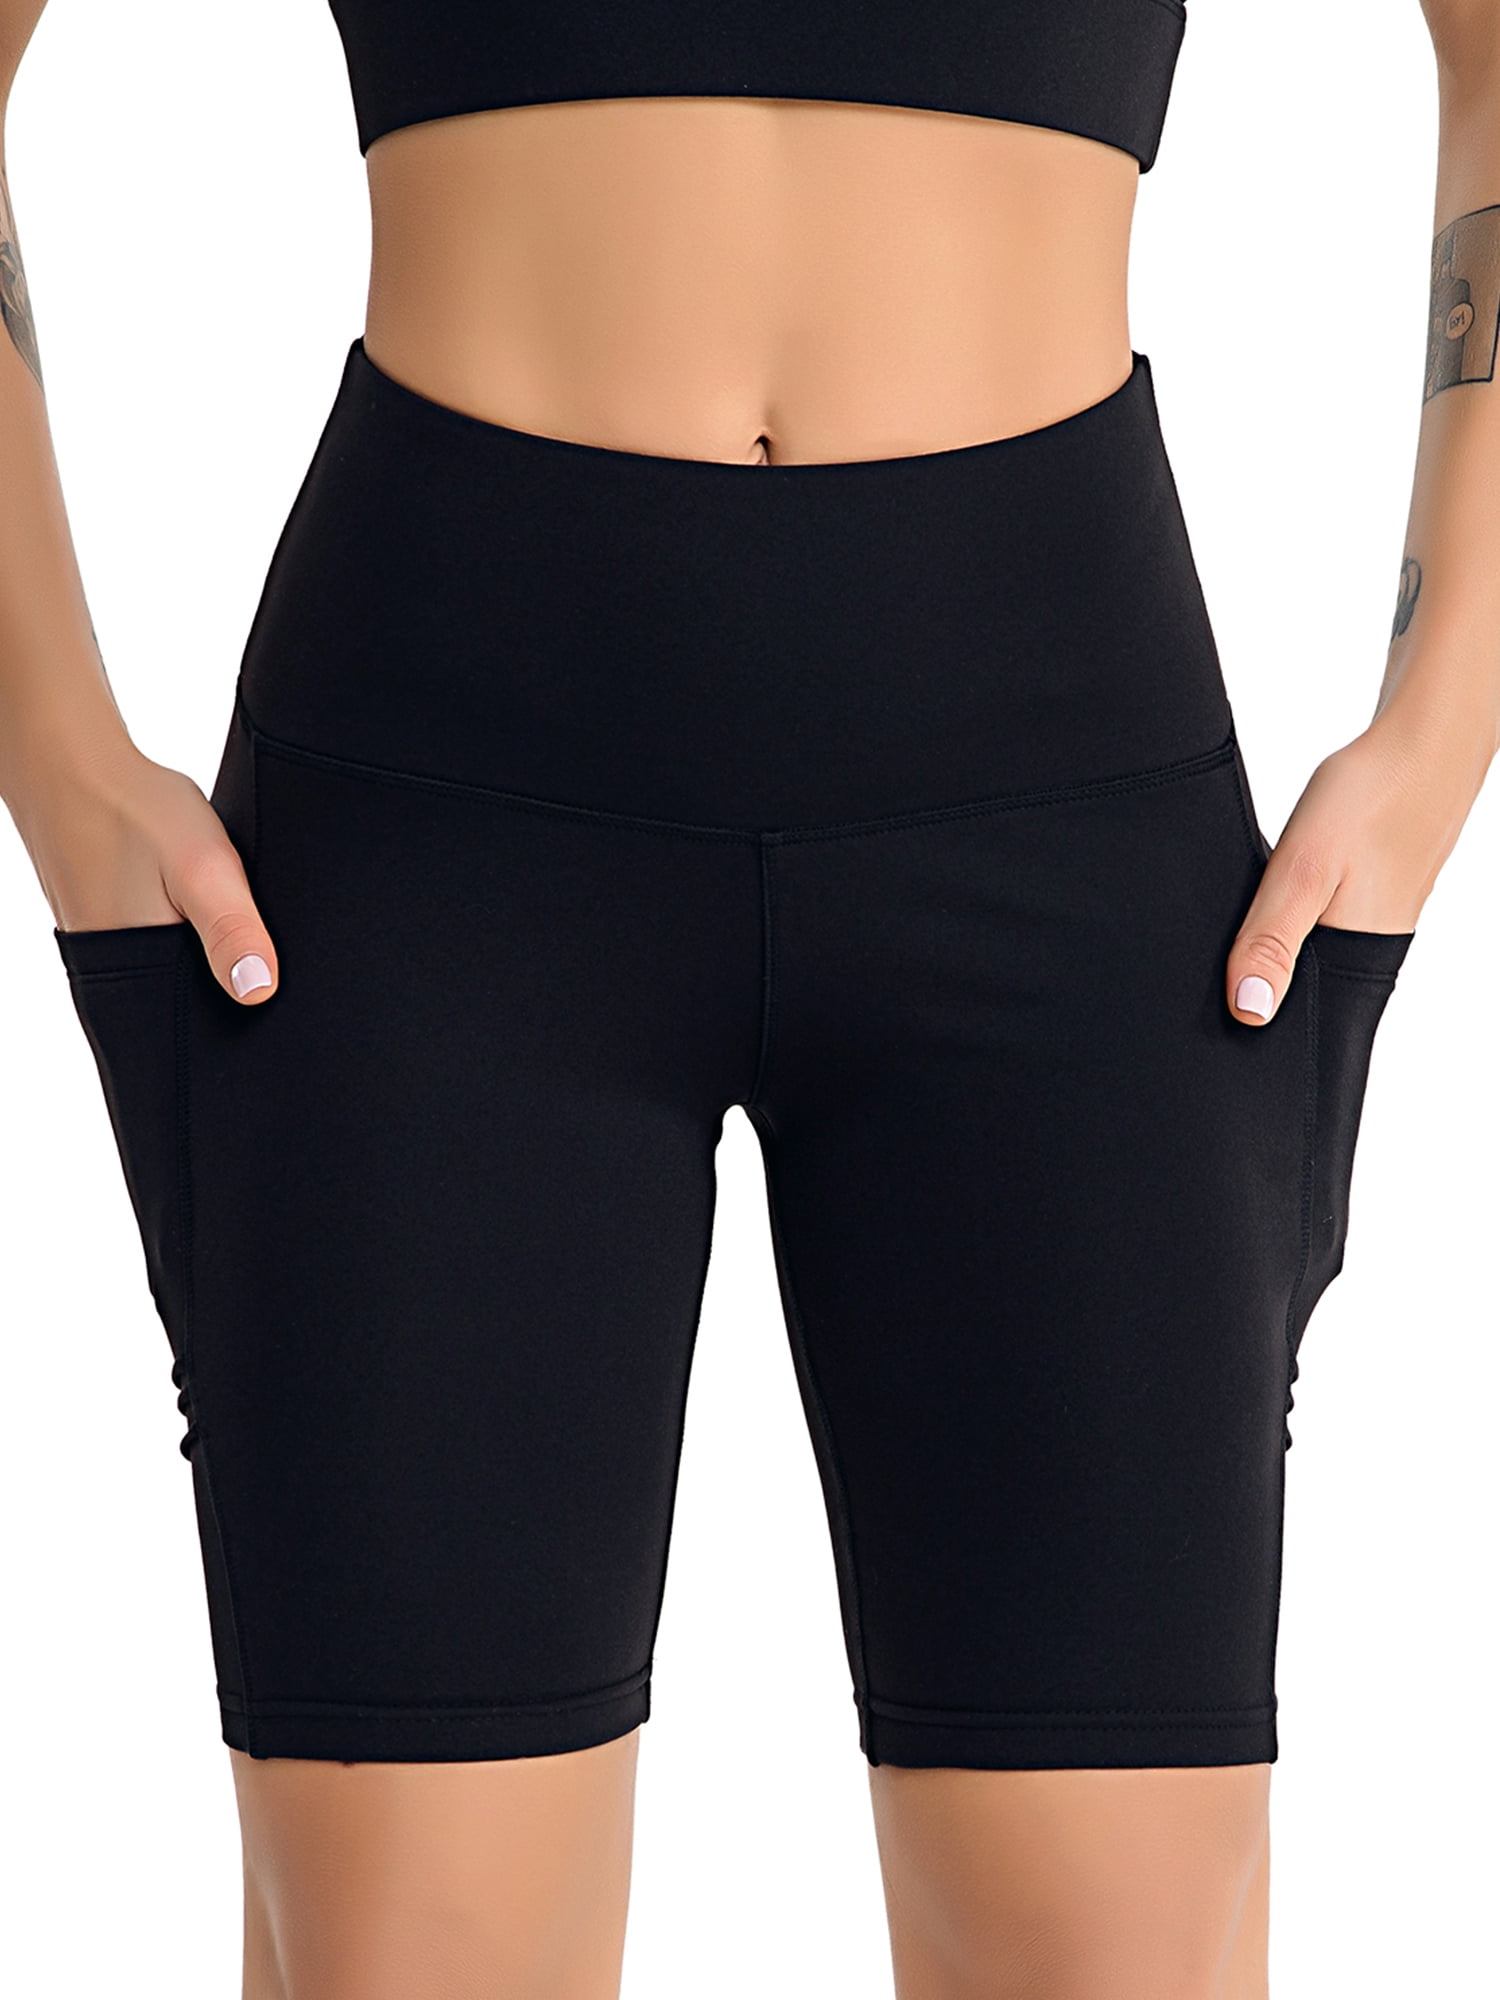 Sythyee Womens High Waist Yoga Shorts Tummy Control Workout Running Compression Shorts Side Pocket 